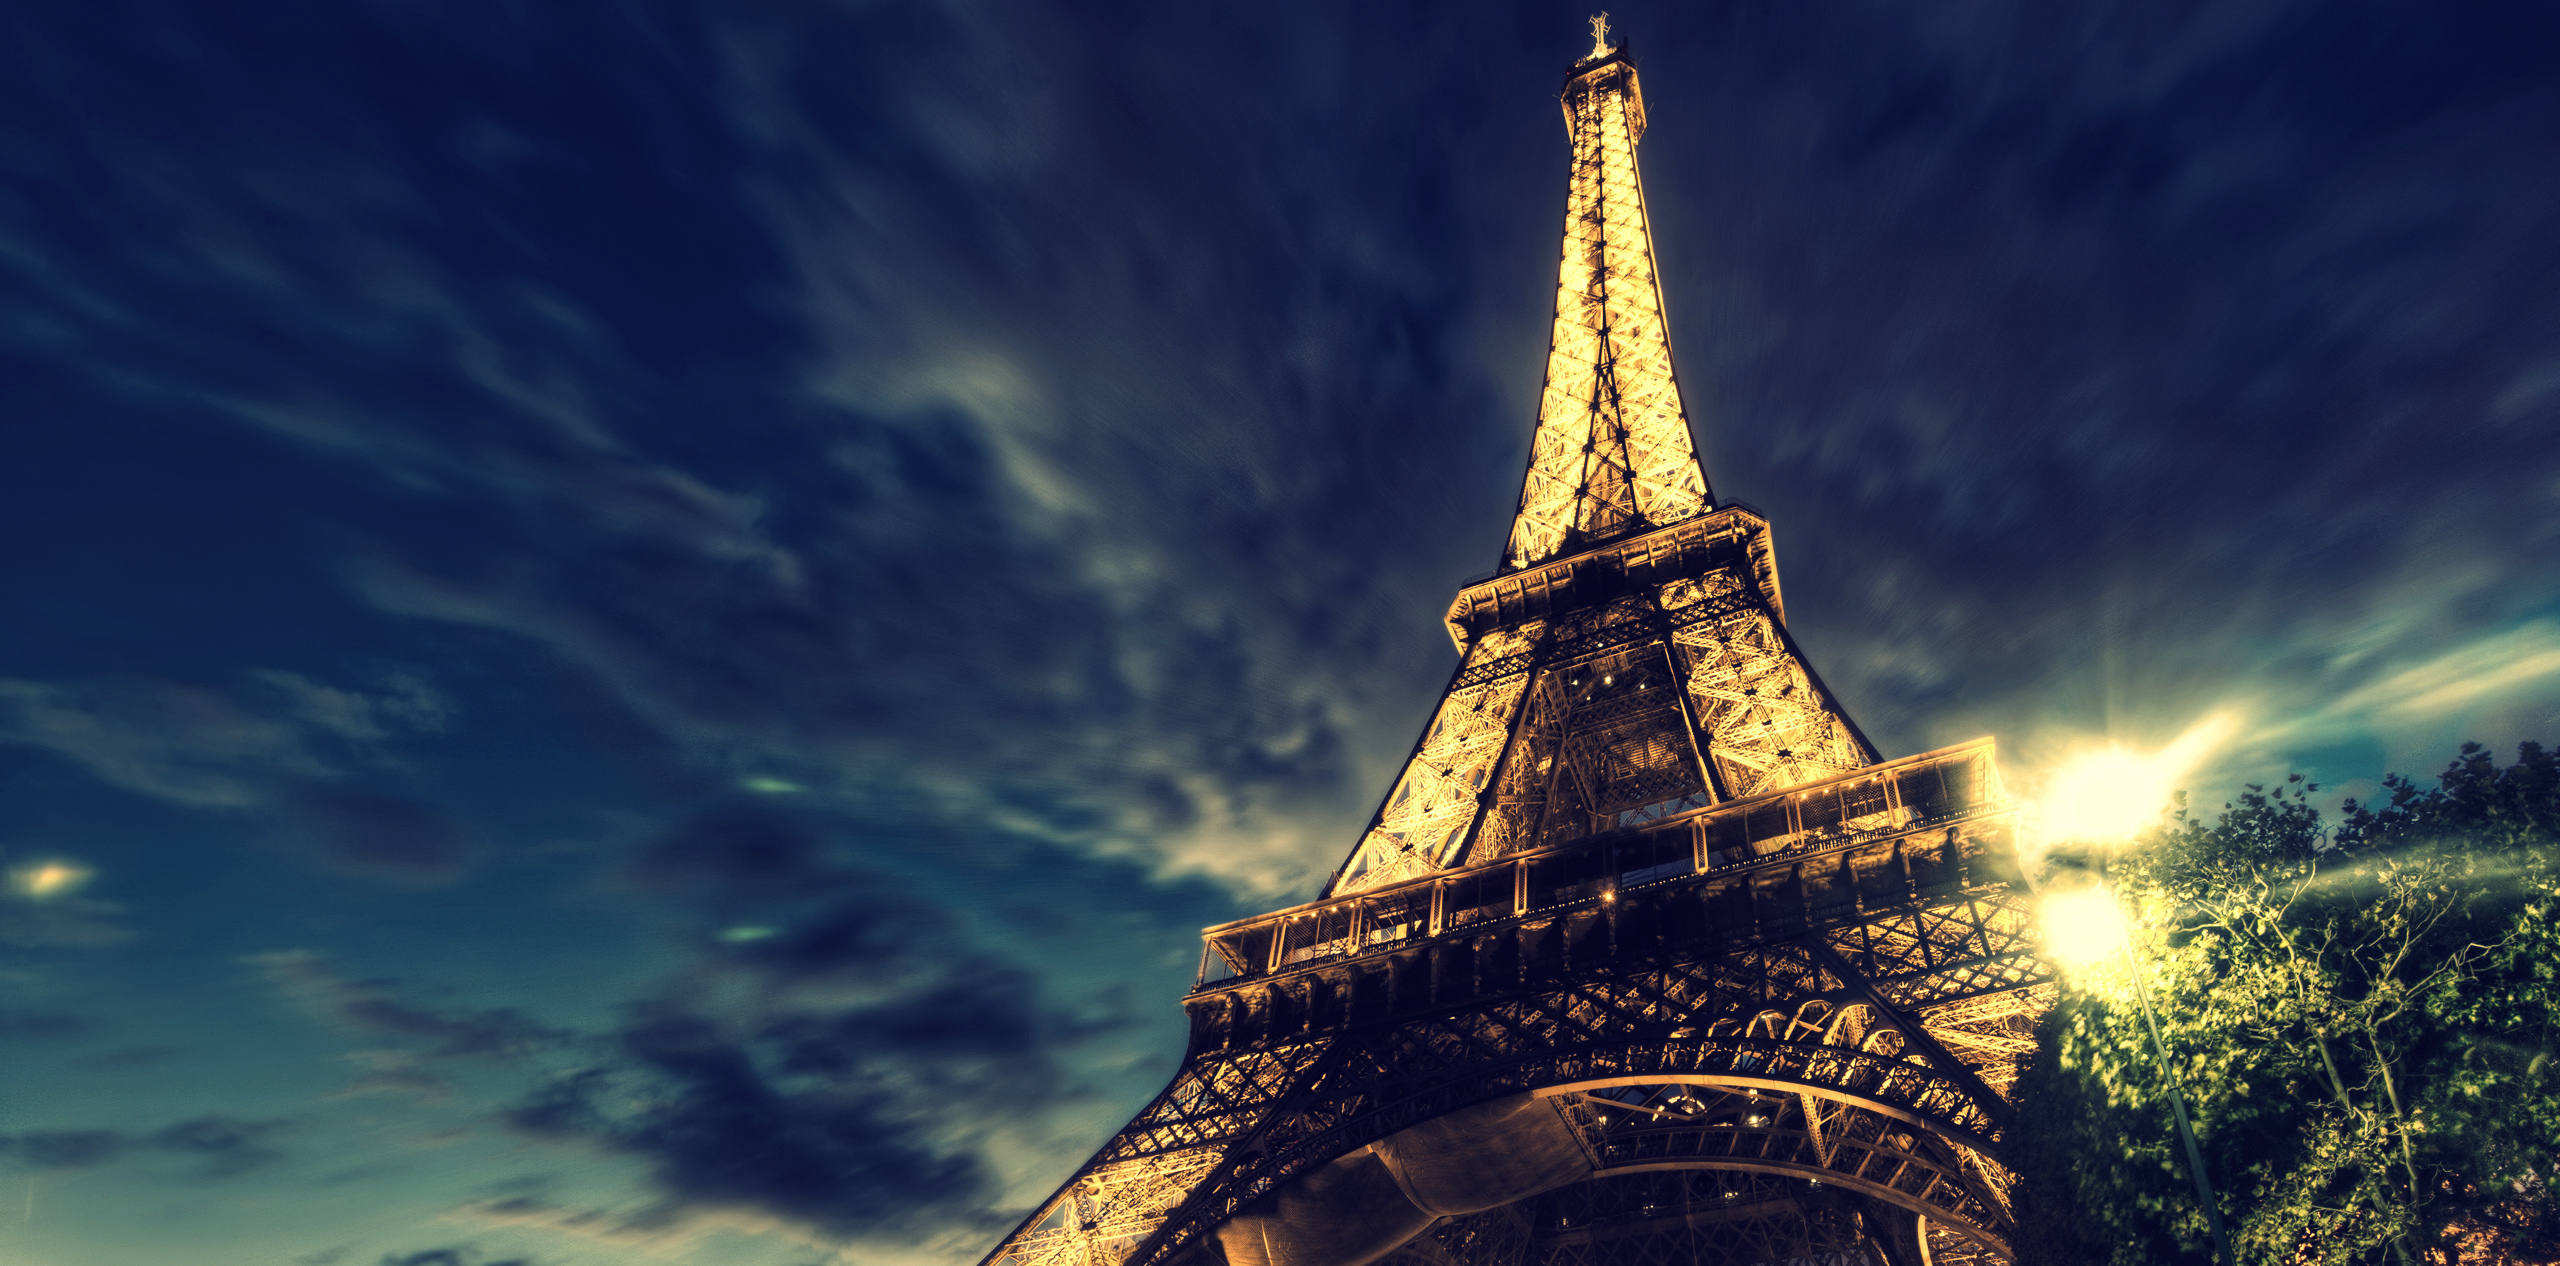 🔥 [72+] Eiffel Tower At Night Wallpaper | Wallpapersafari